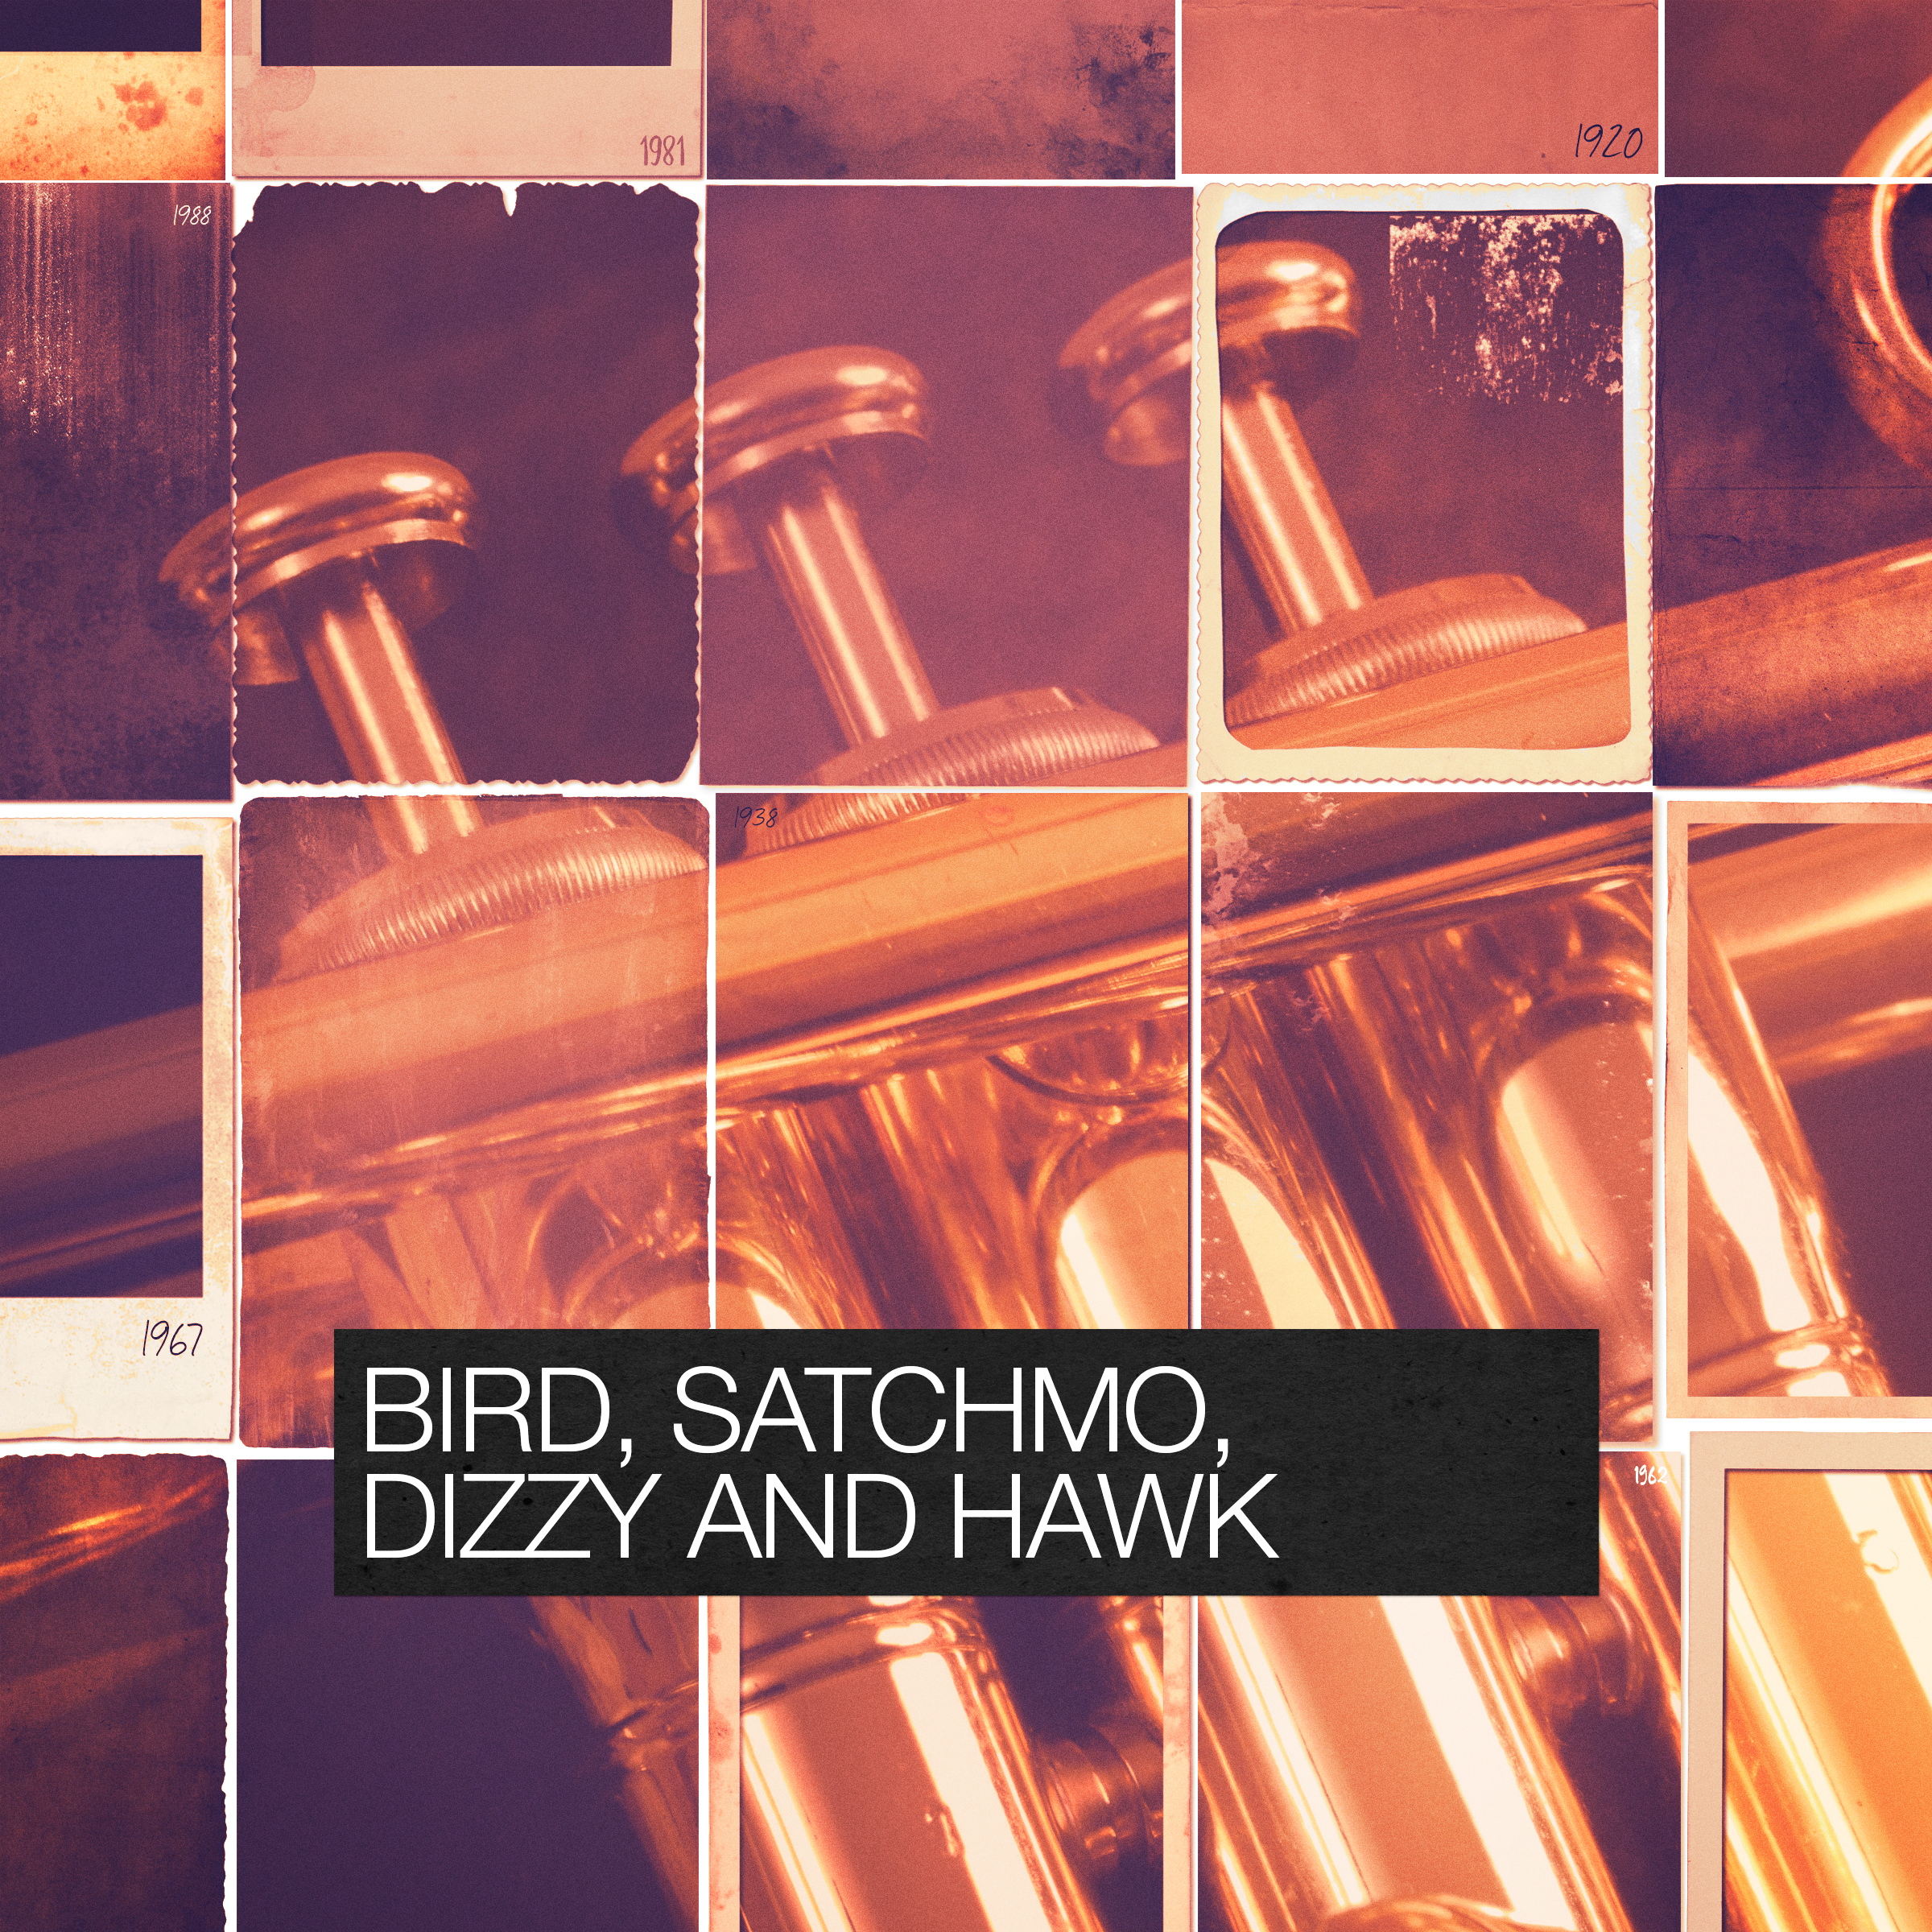 Bird, Satchmo, Dizzy and Hawk